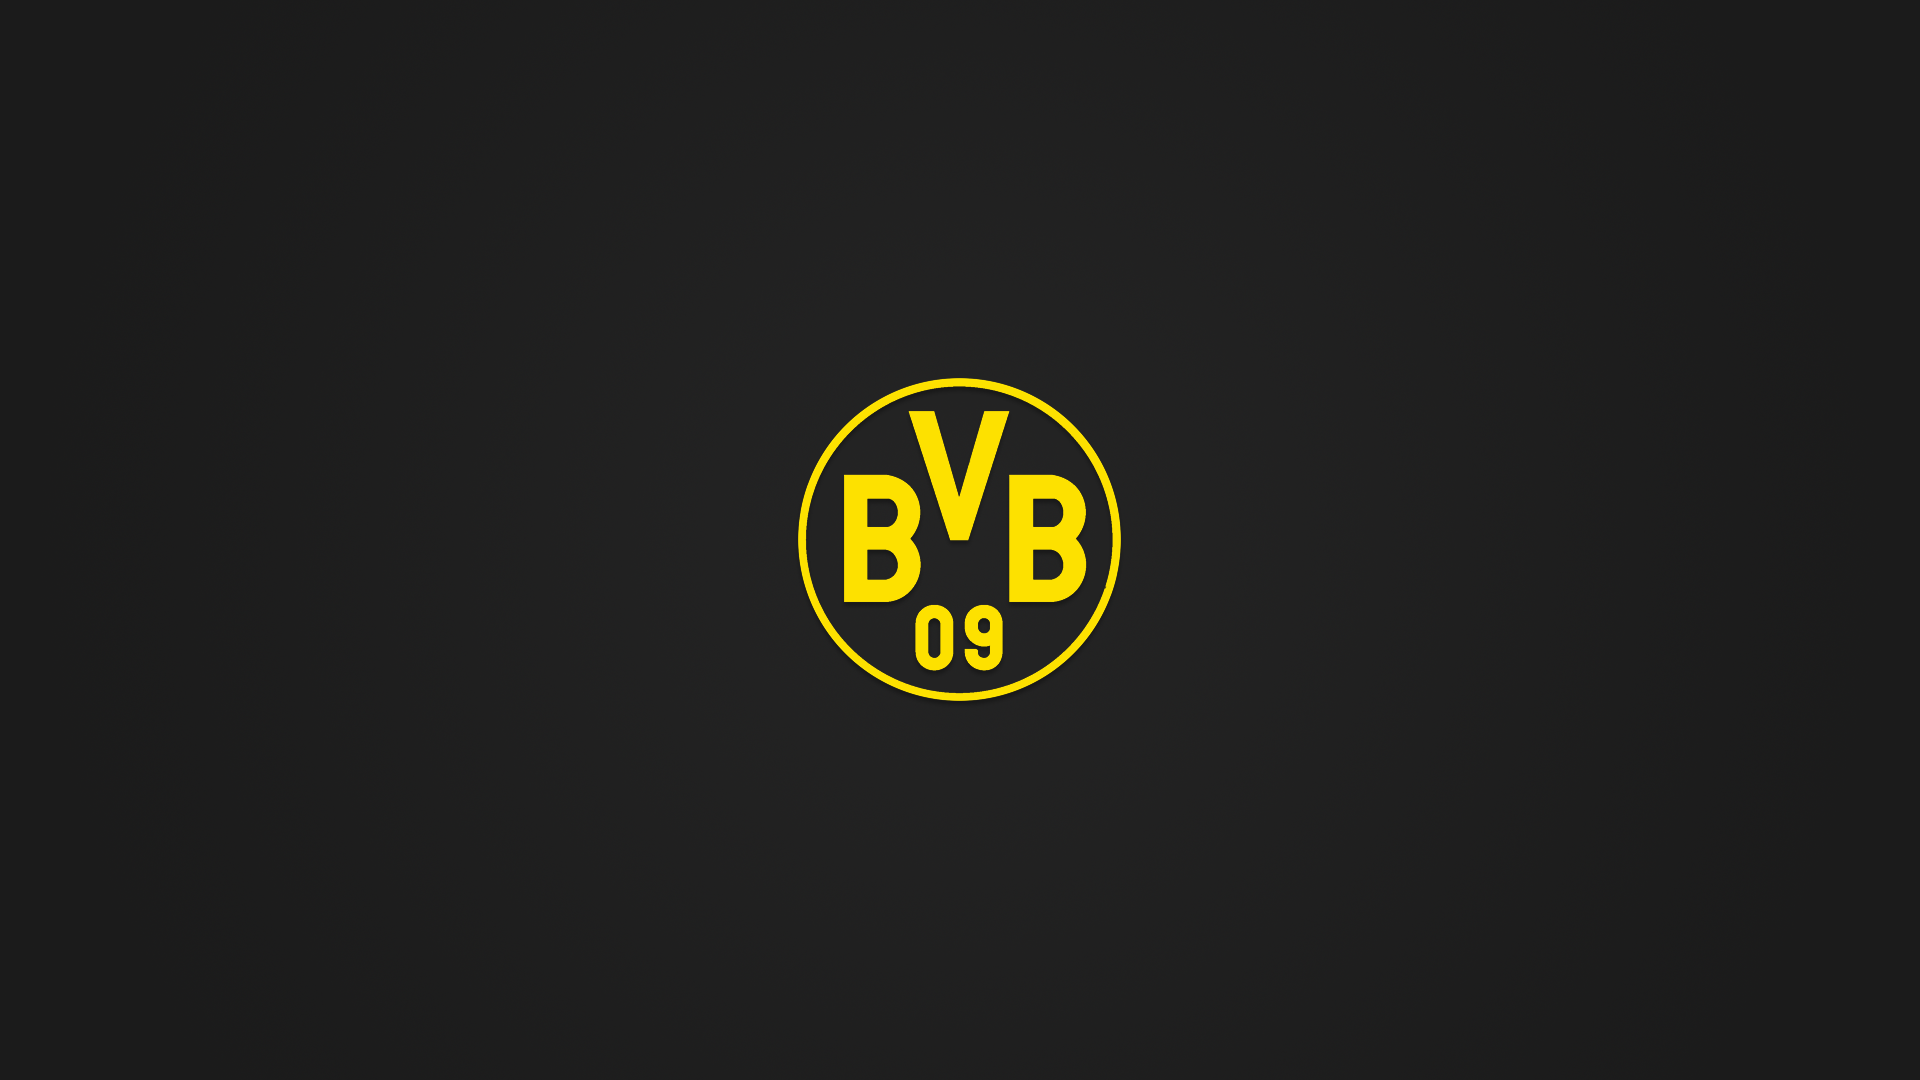 General 1920x1080 BVB Borussia Dortmund minimalism sport logo simple background black background numbers soccer clubs Bundesliga German